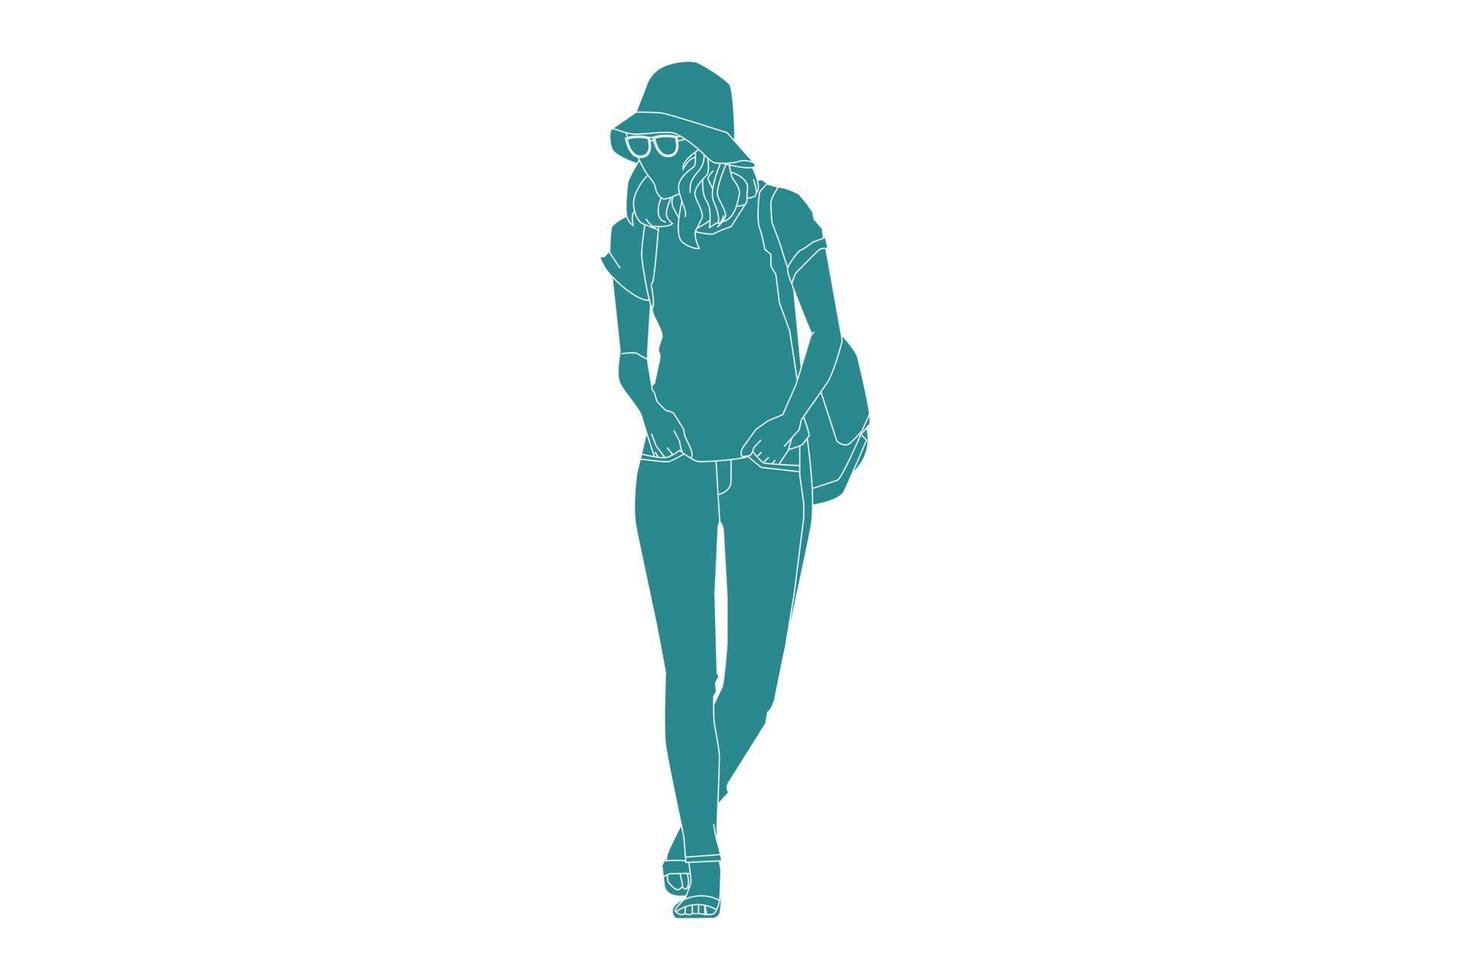 vektorillustration av avslappnad kvinna som går på sidokanten med hinkhatt, platt stil med konturer vektor